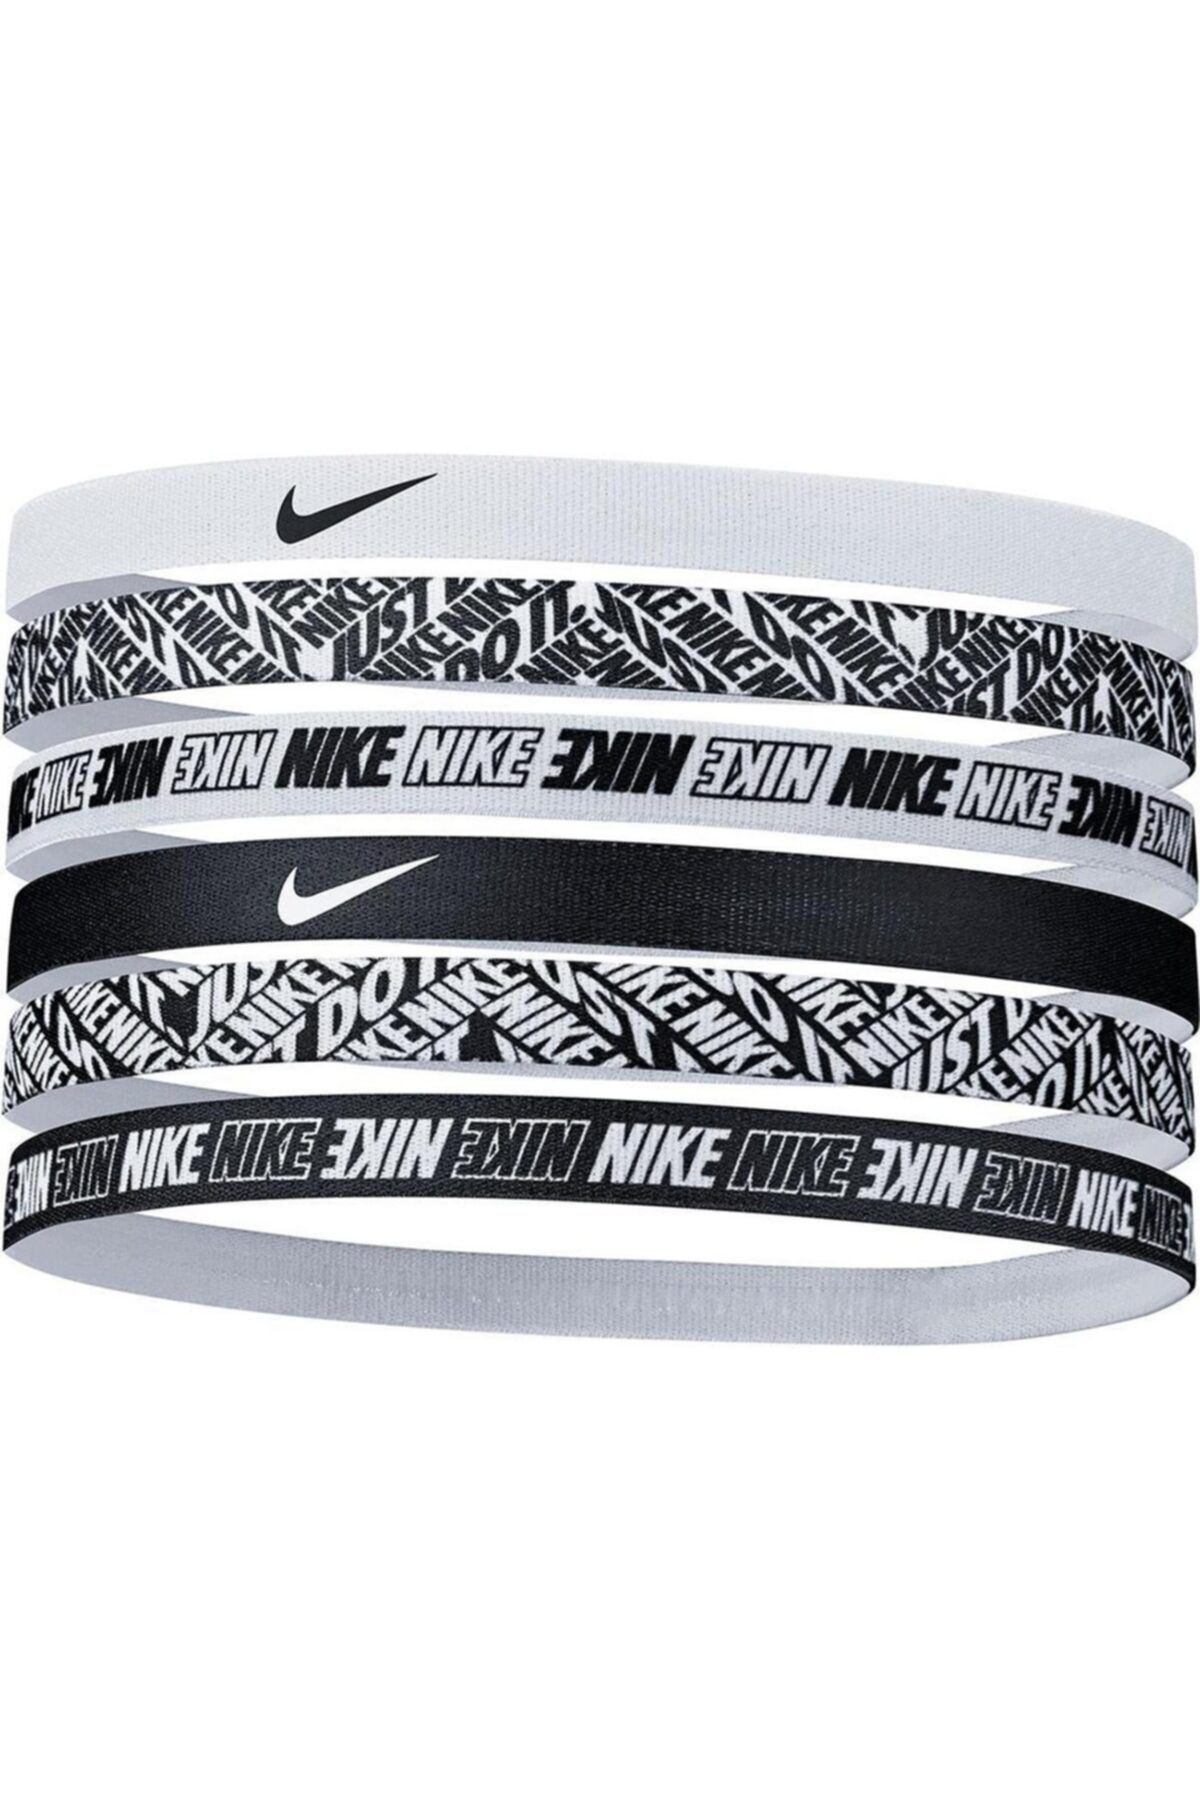 Nike Aksesuar Printed Headbands 6pk Unisex Beyaz Antrenman Saç Bandı N.000.2545.176.os